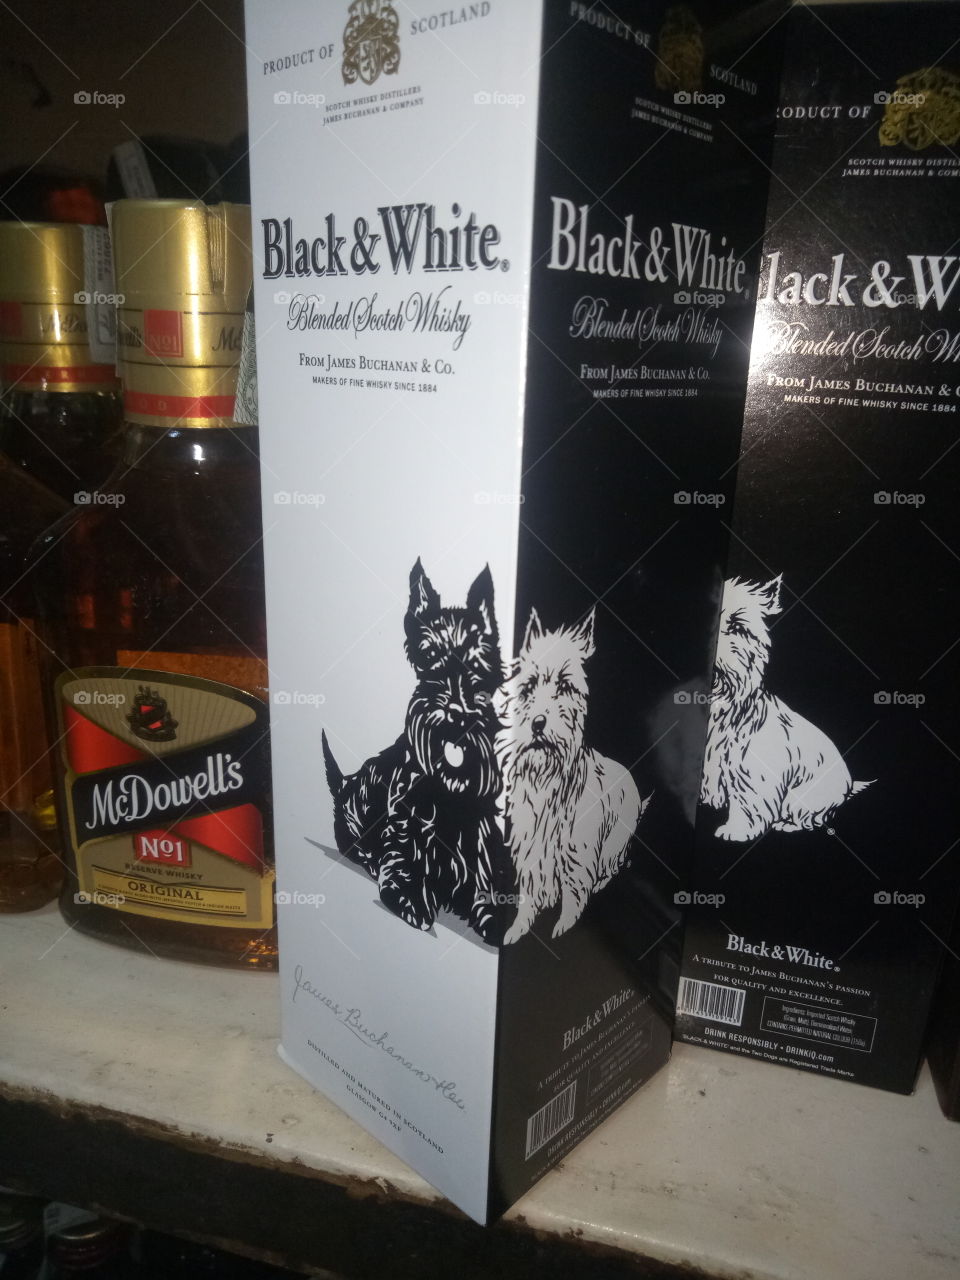 India black and white whisky 😘😘